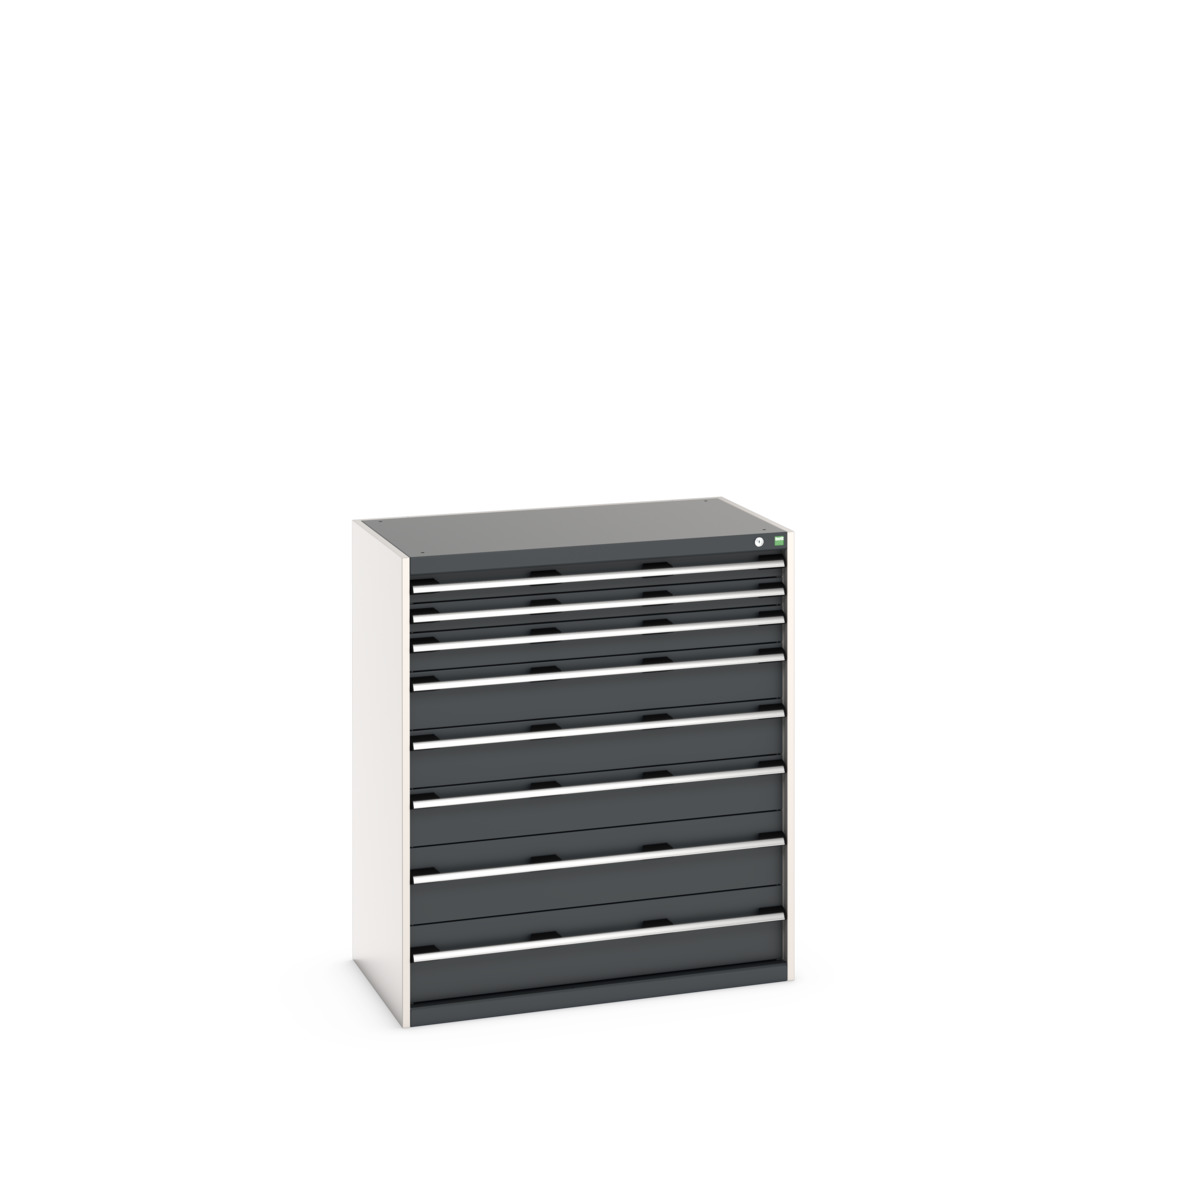 40021039. - cubio drawer cabinet